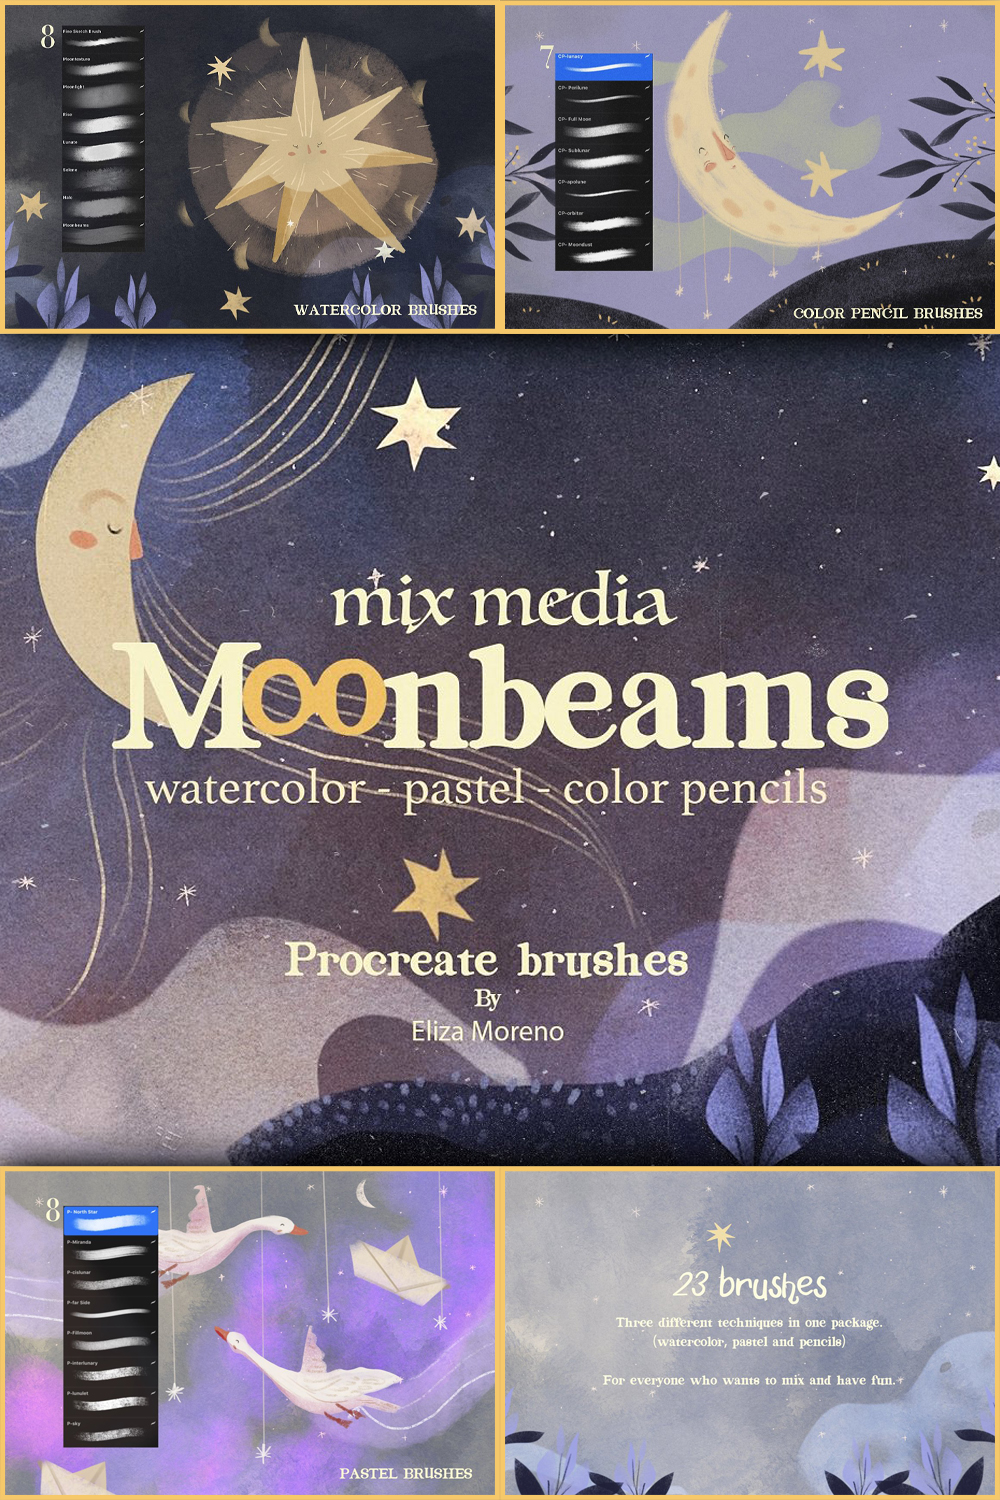 Moonbeams mix media brushes of pinterest.